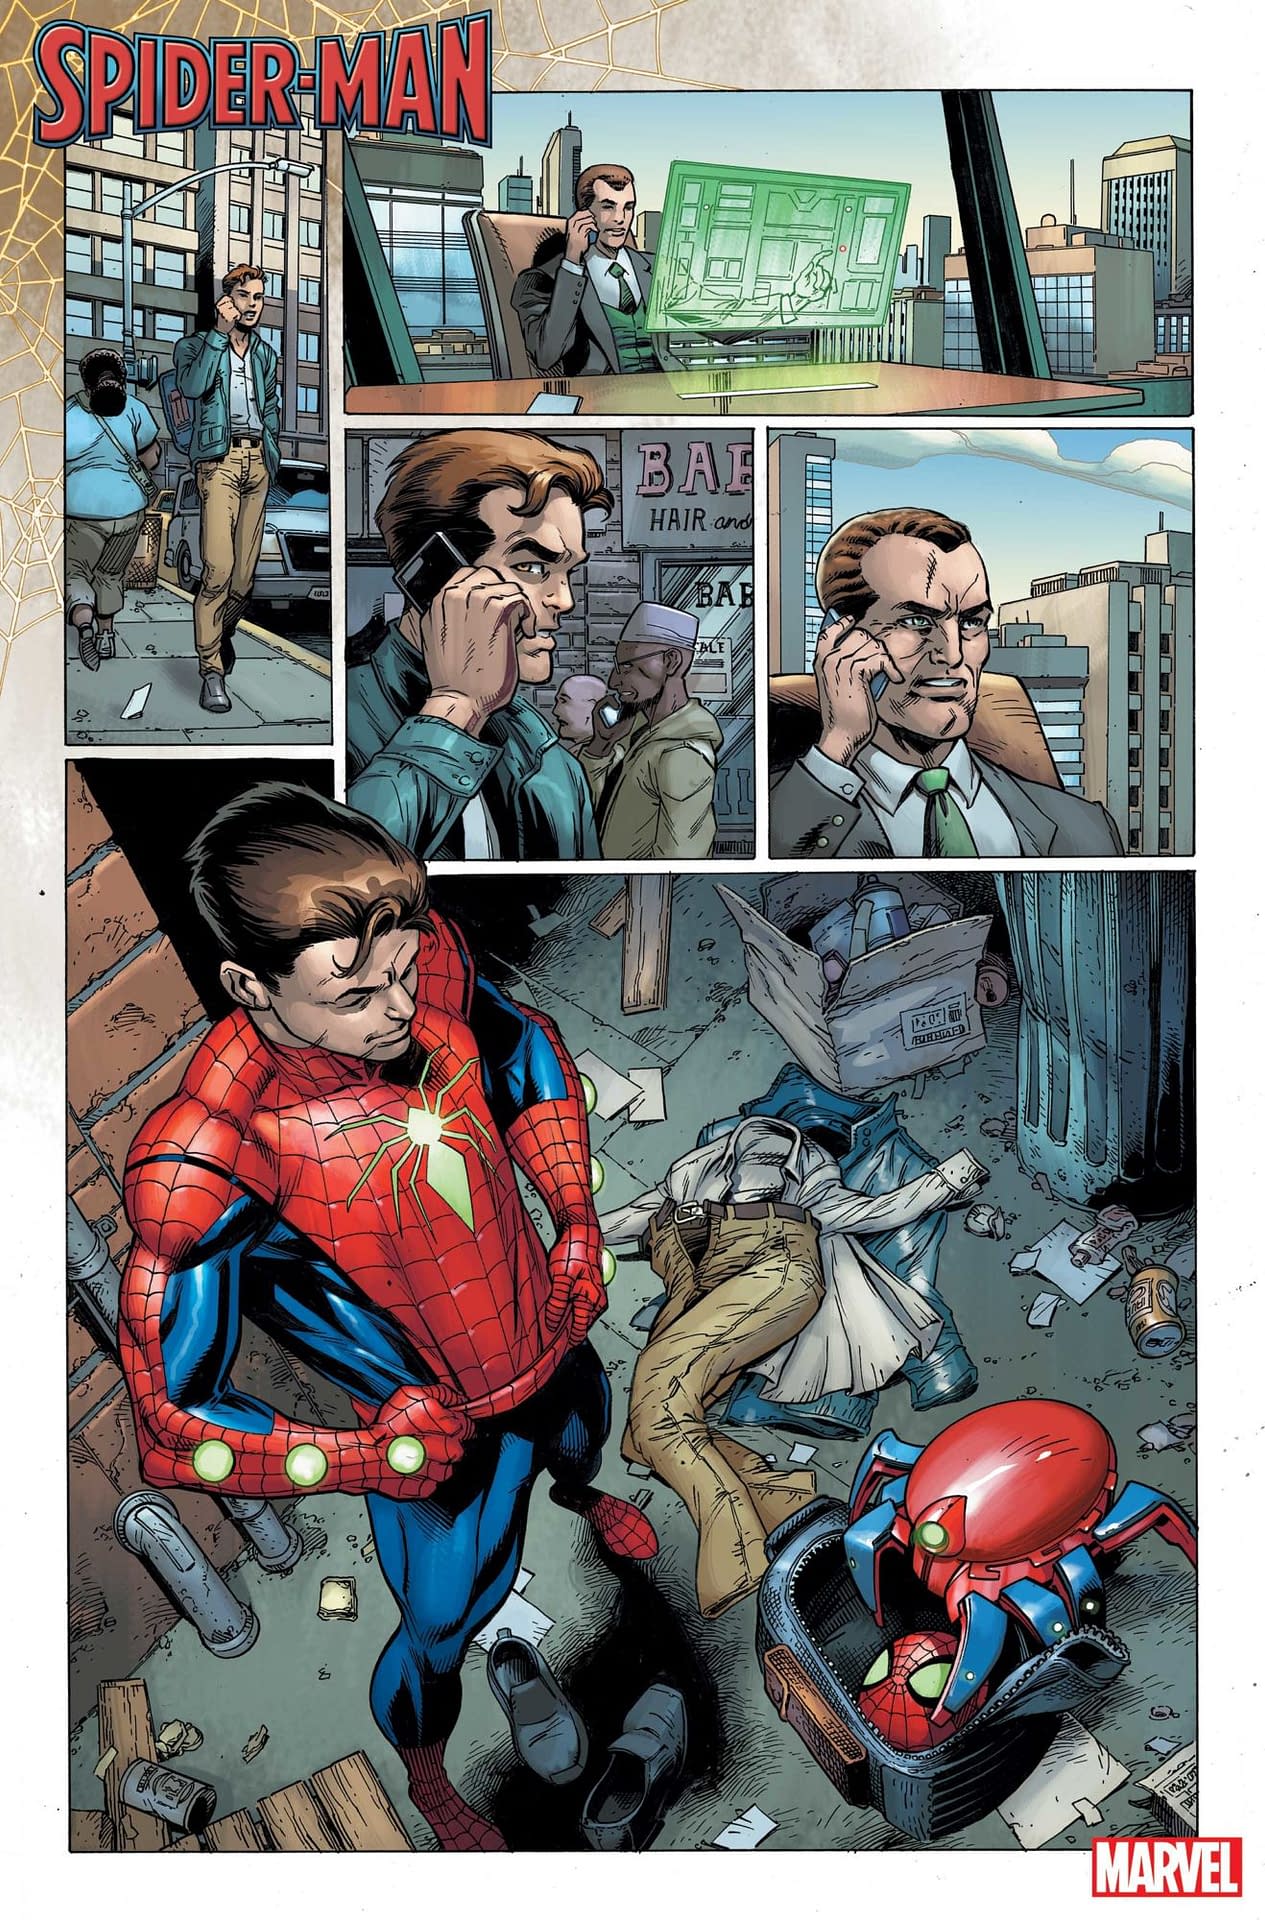 A Spider-Man #1 From Dan Slott & Mark Bagley, In Norman Osborn's Suit